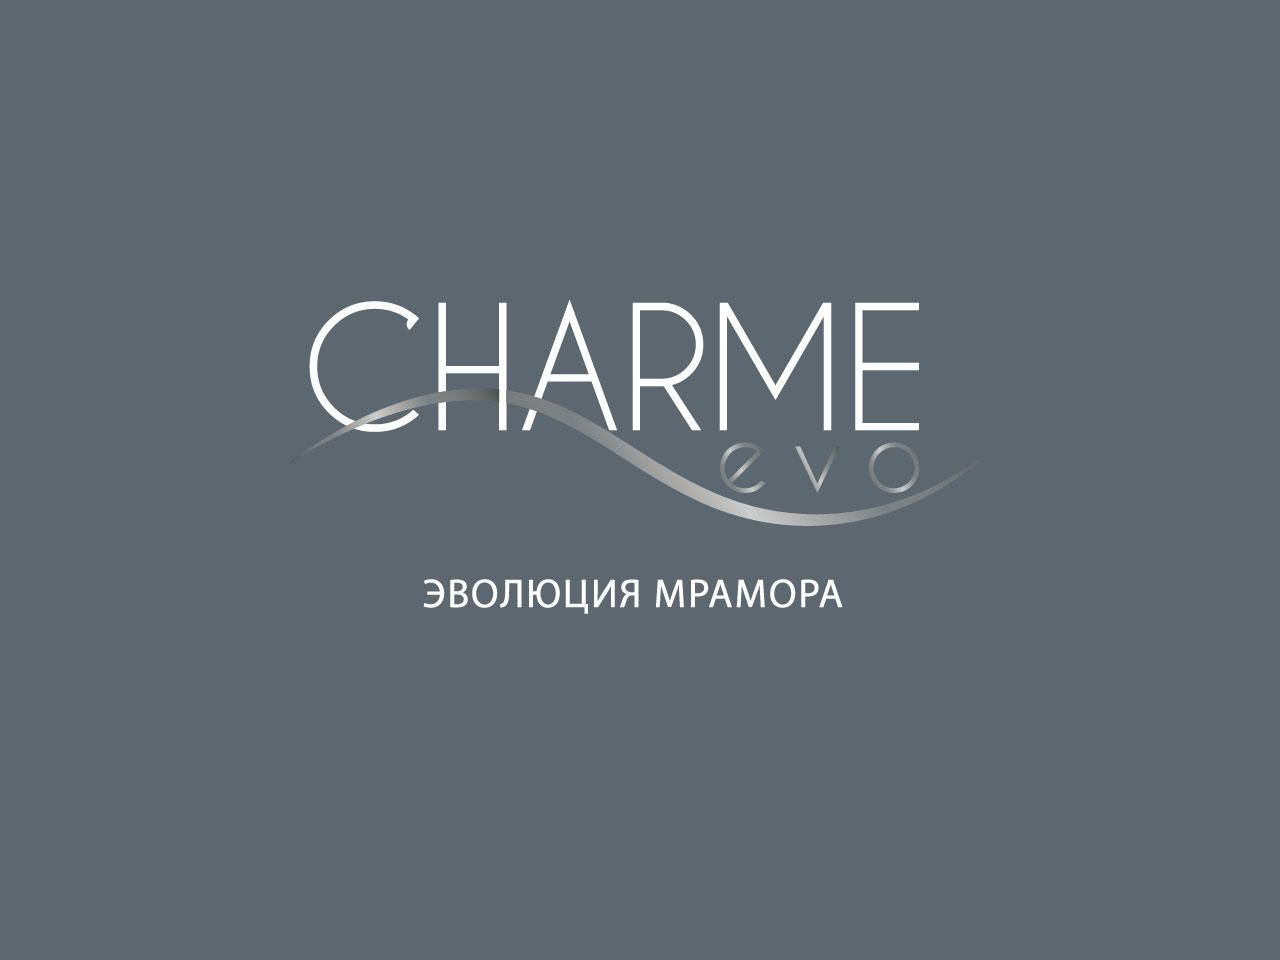 Charme Evo Floor Project